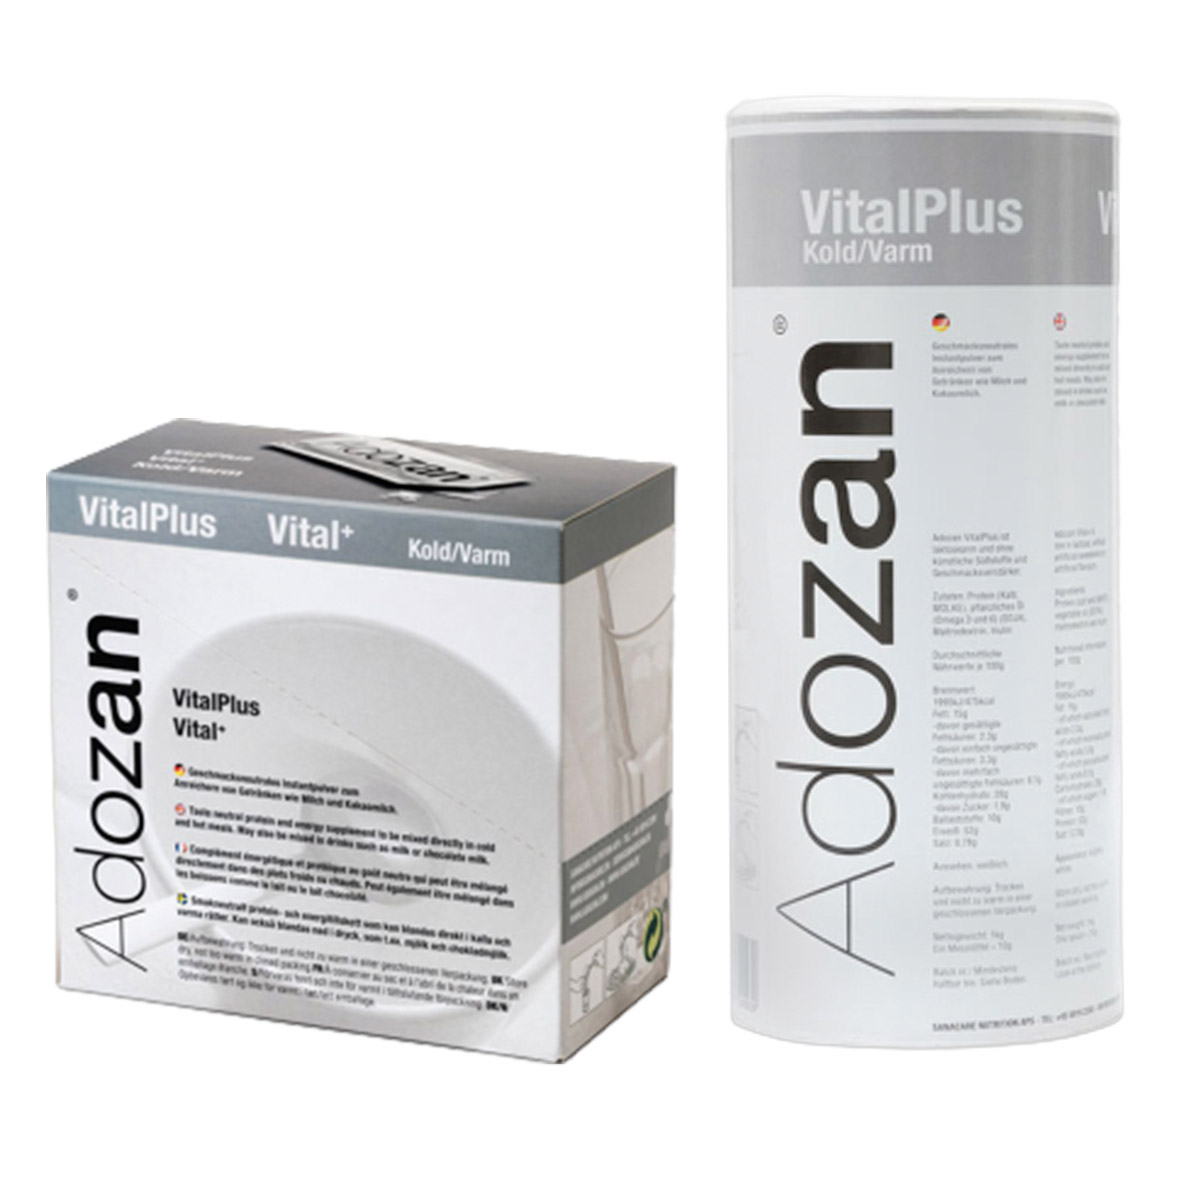 Adozan Vital Plus Protein WLS Products